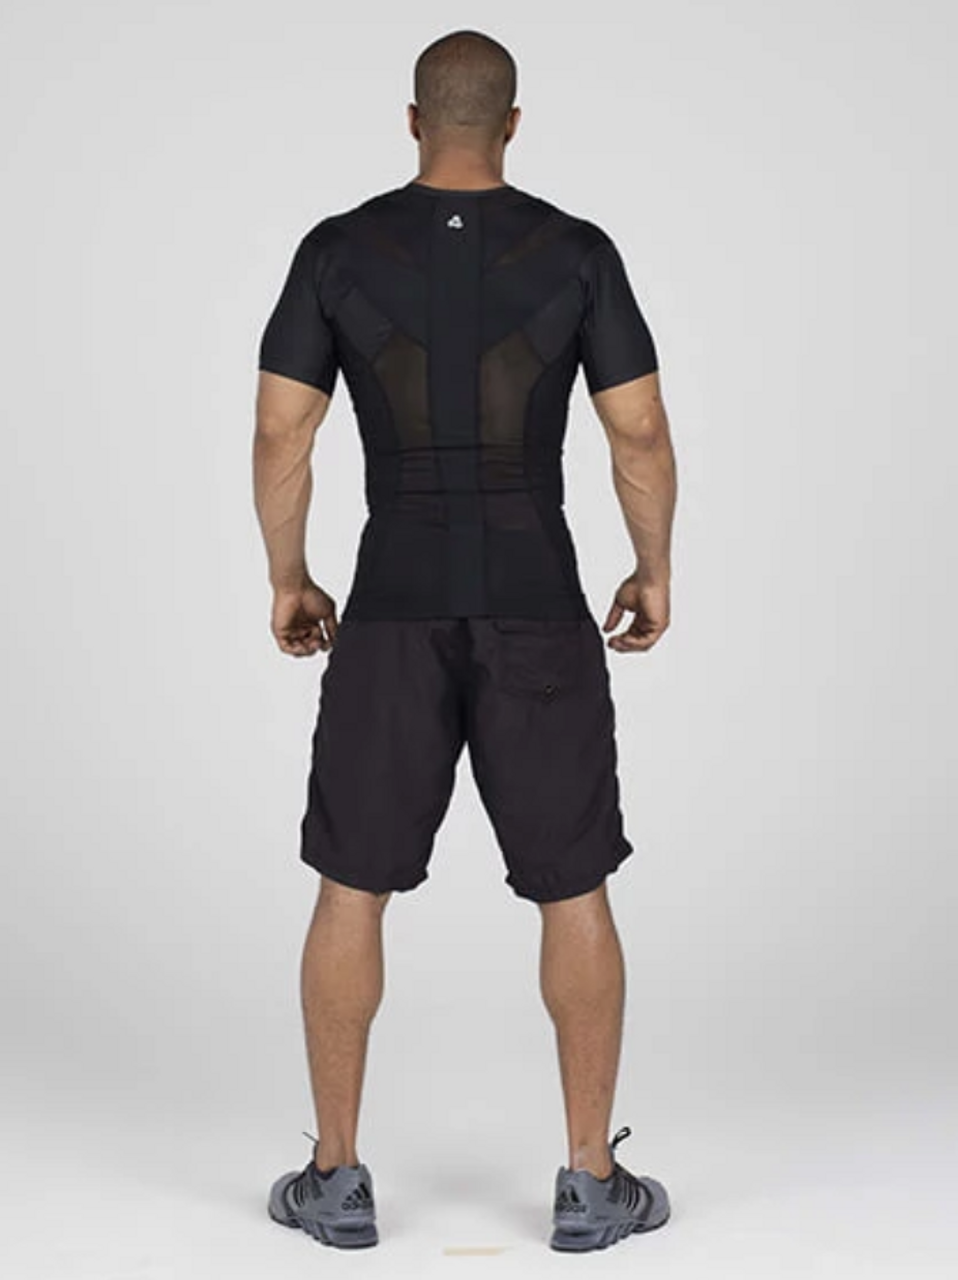 Alignmed Postural Fitness The Posture Shirt 2.0 Men's Large Black